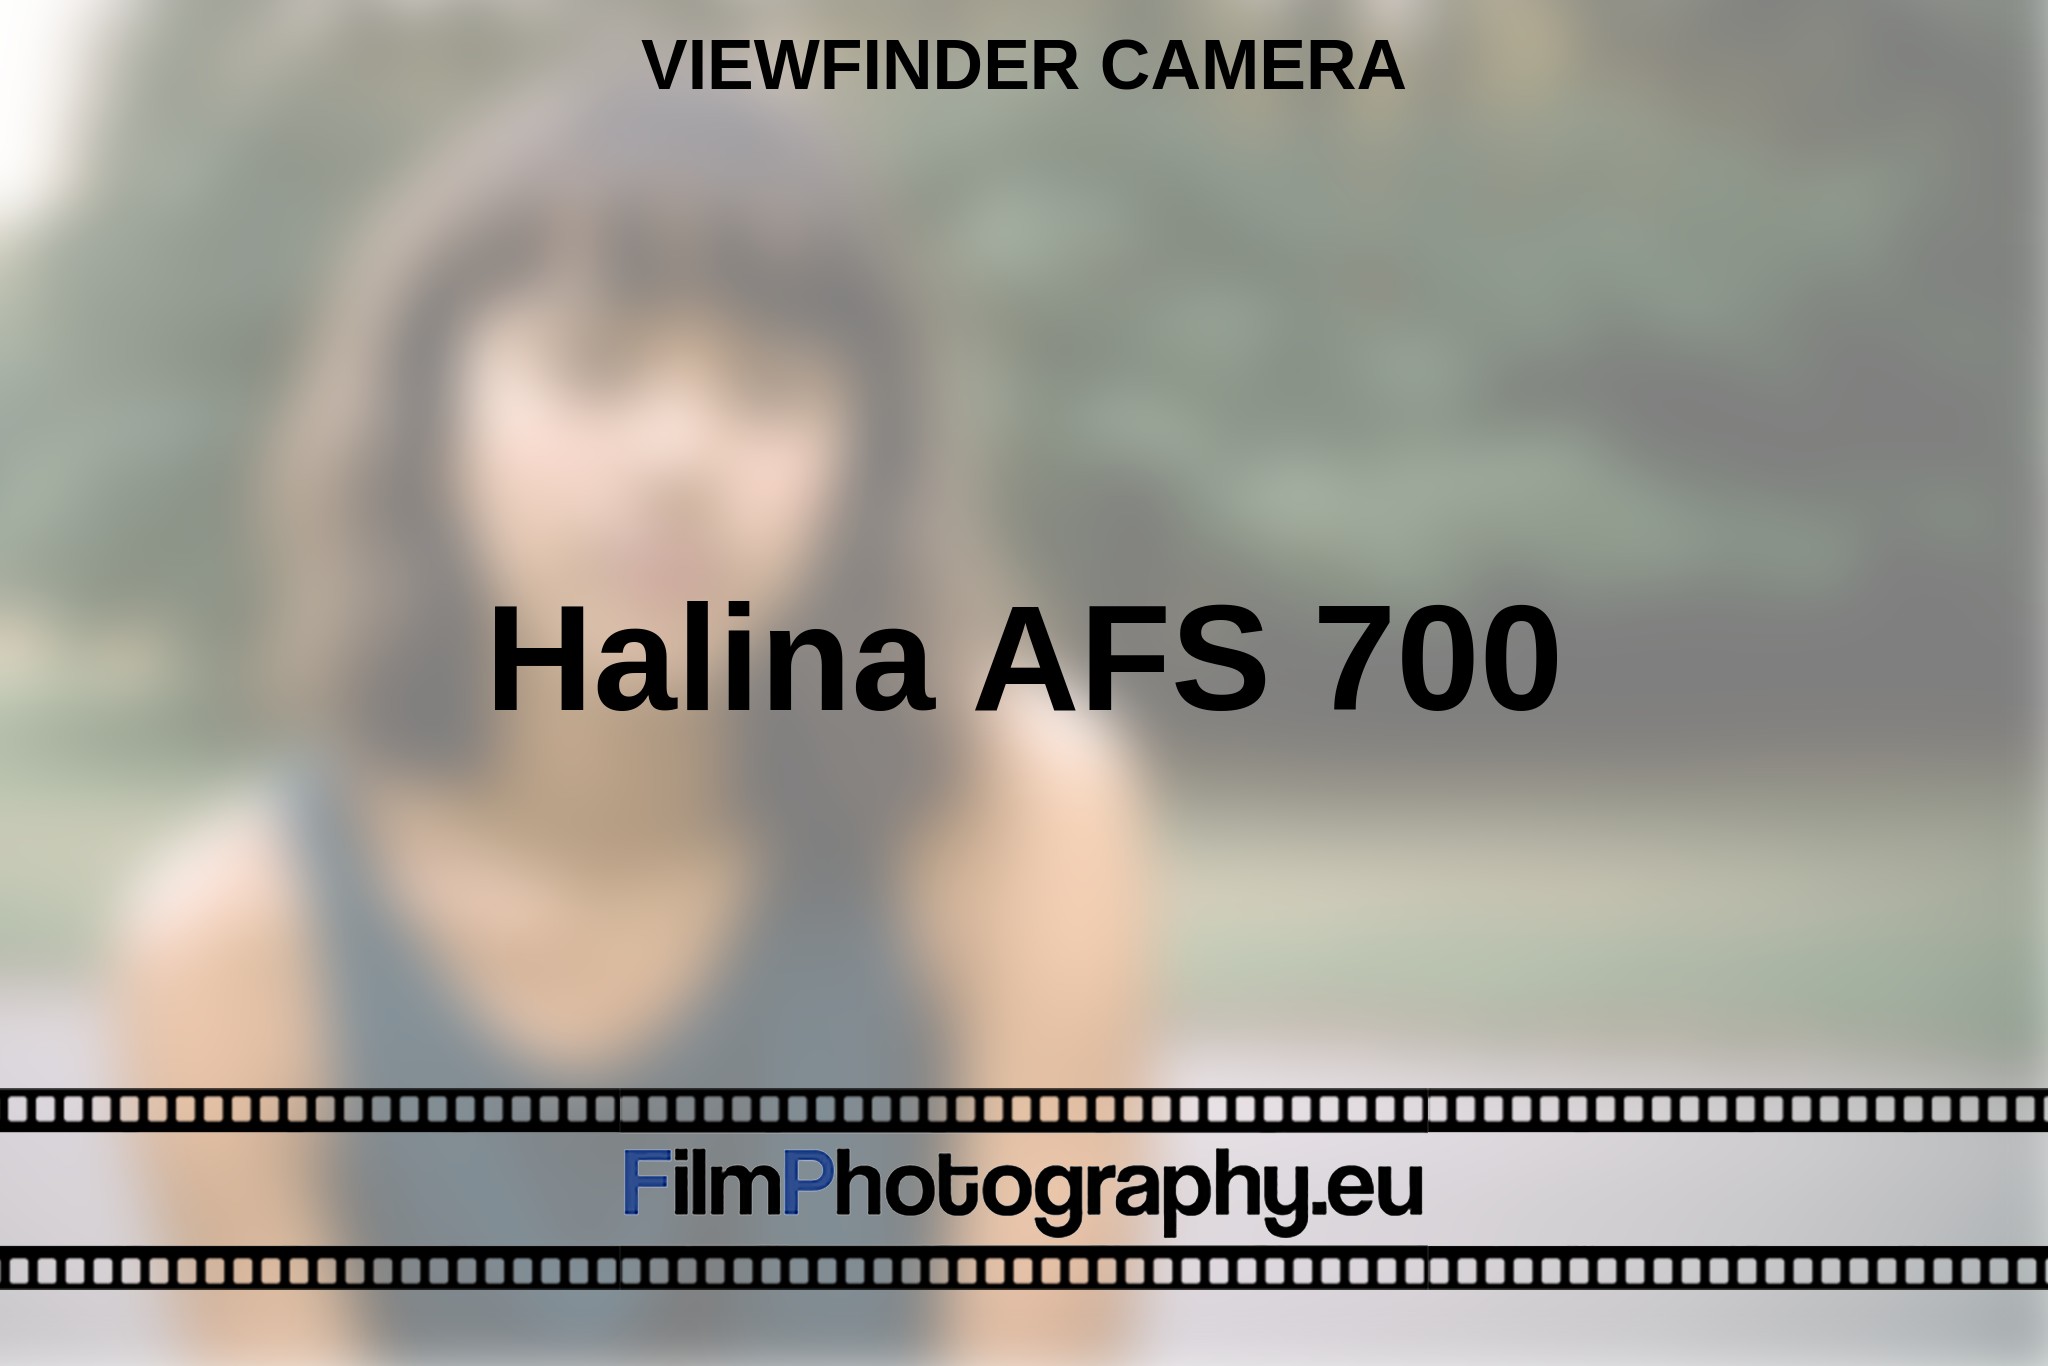 halina-afs-700-viewfinder-camera-en-bnv.jpg